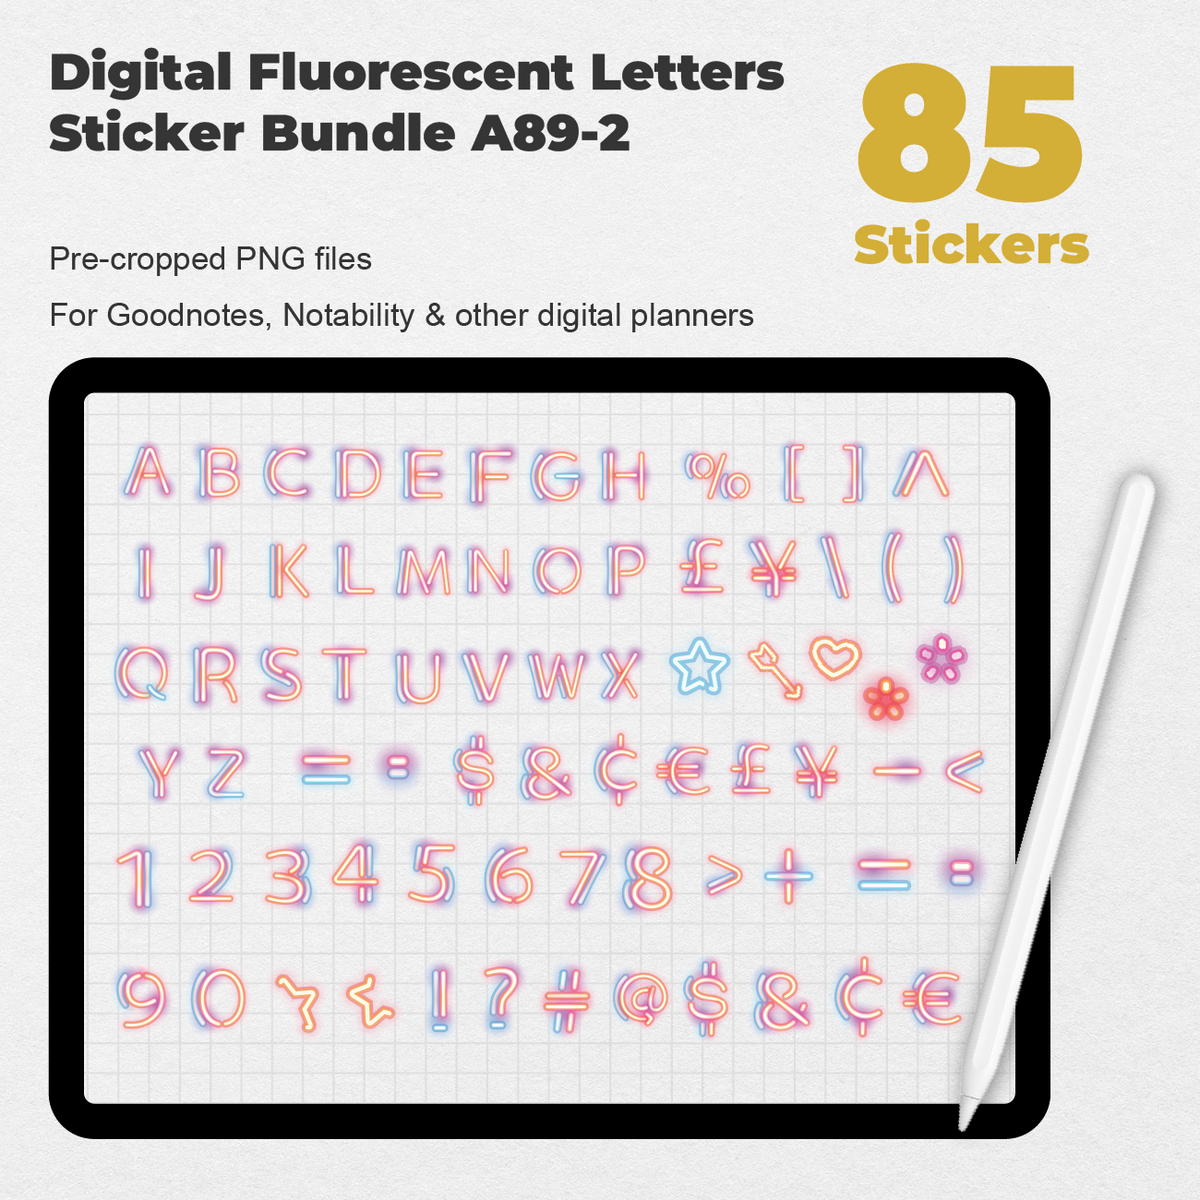 54 Digital Vintage Letters and Numbers Sticker Bundle — Stationery Pal